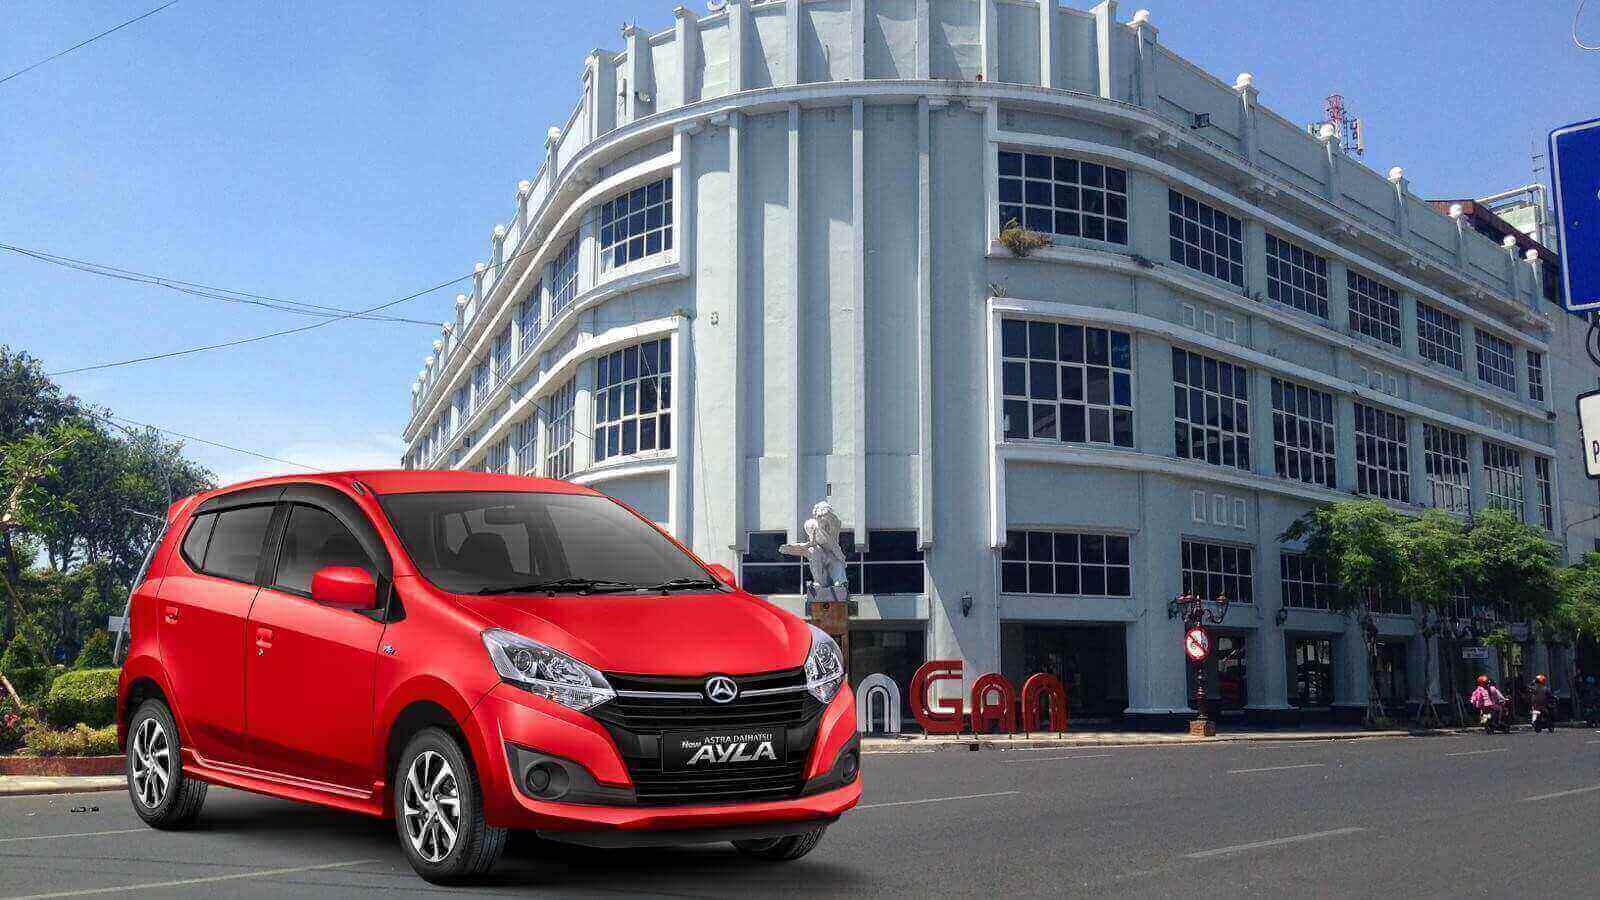 Rental Mobil Surabaya 2019